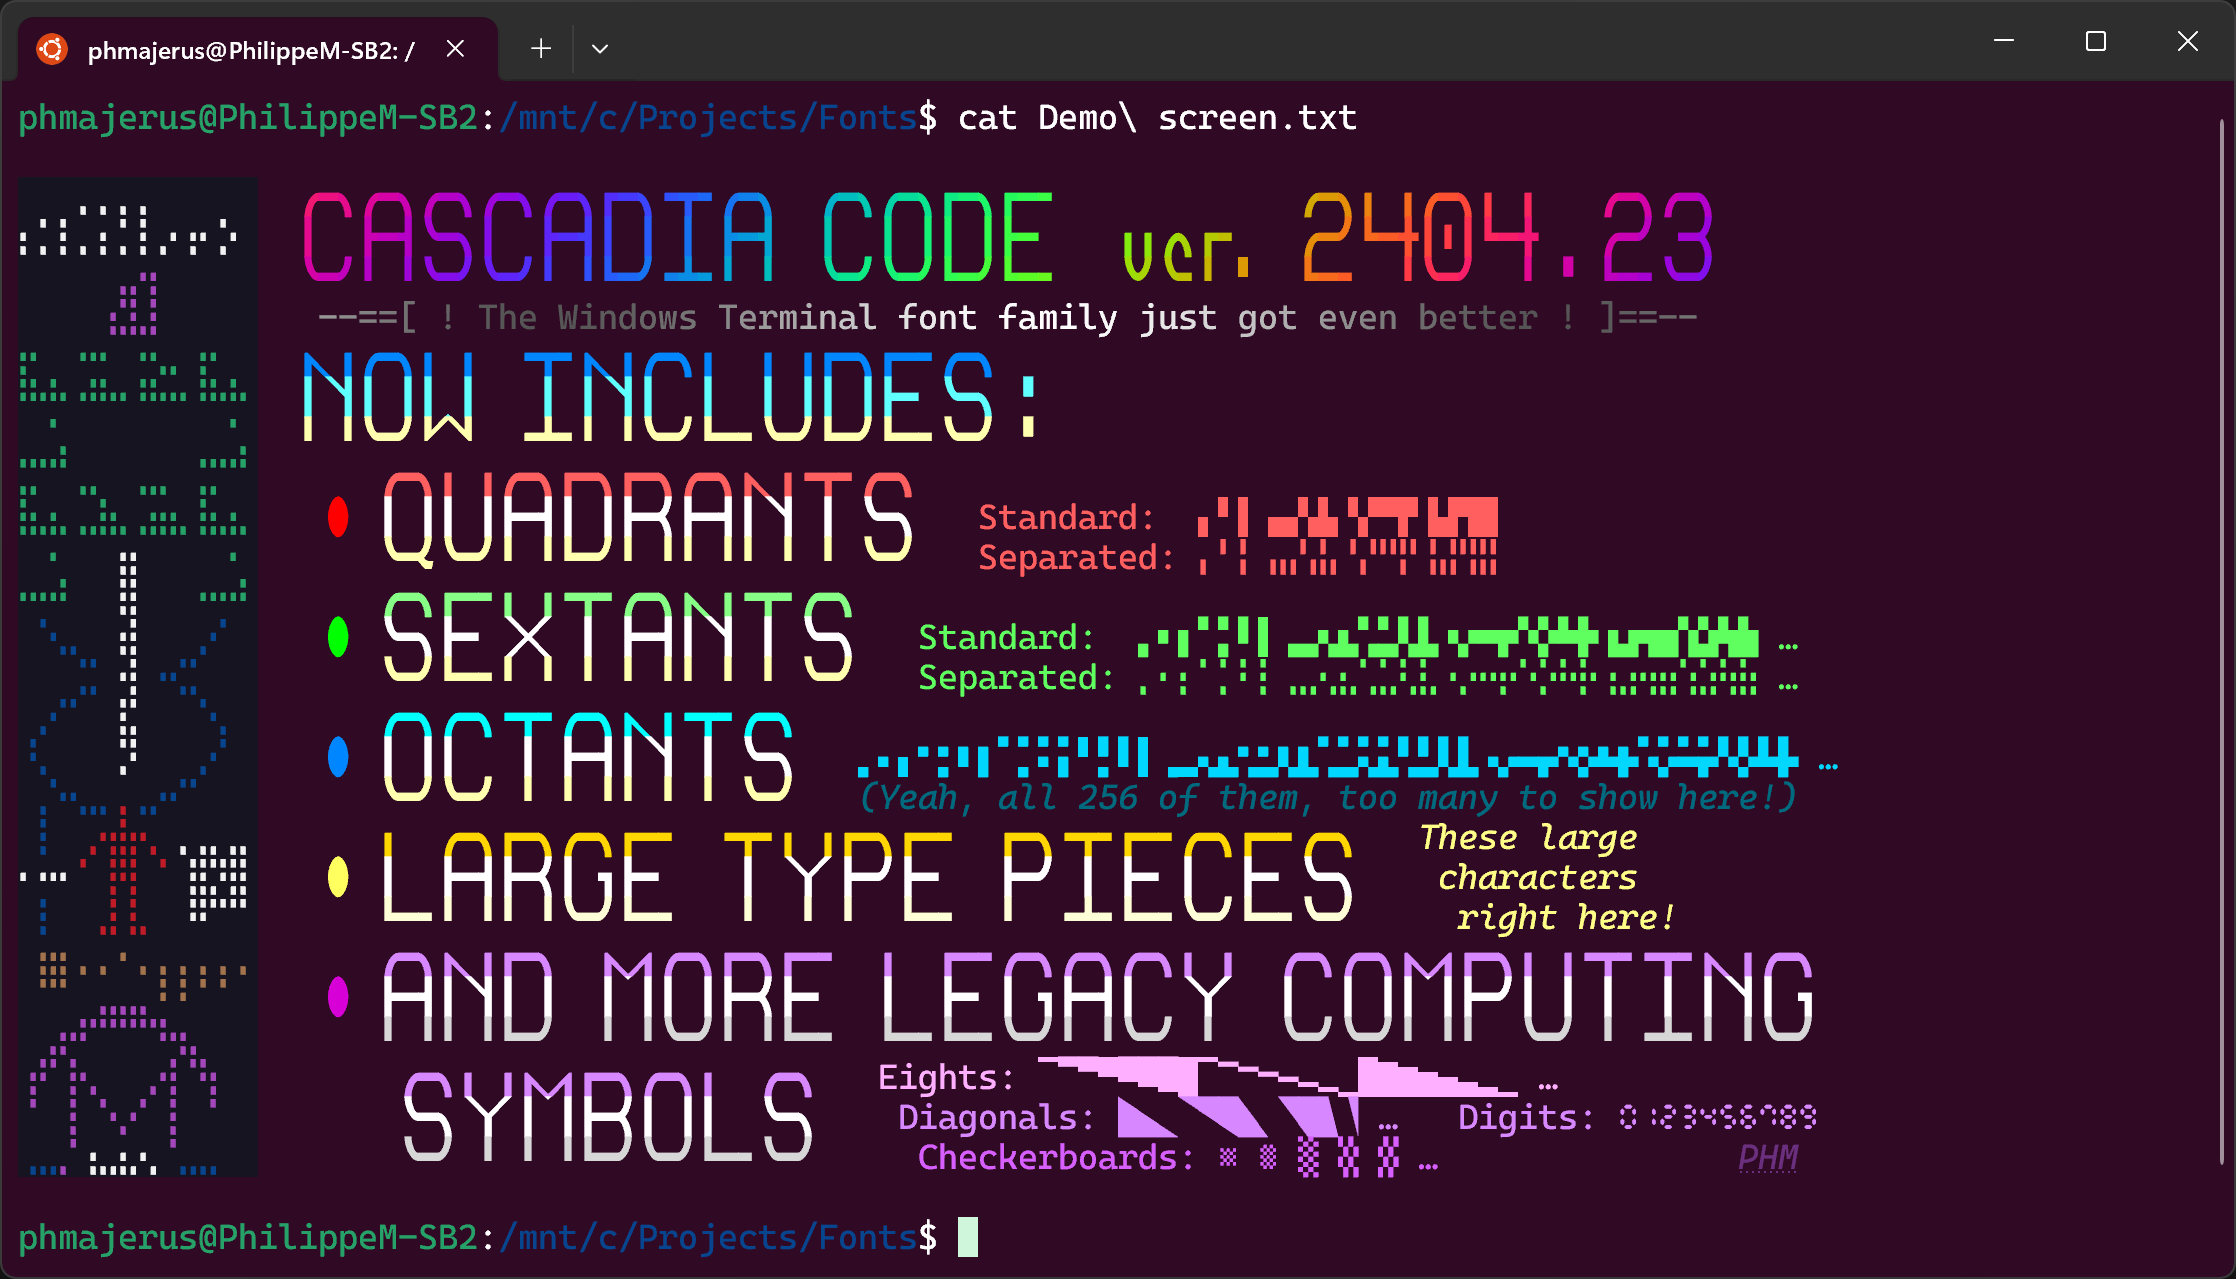 Demo screen (2xDPI) for Cascadia Code 2404.23